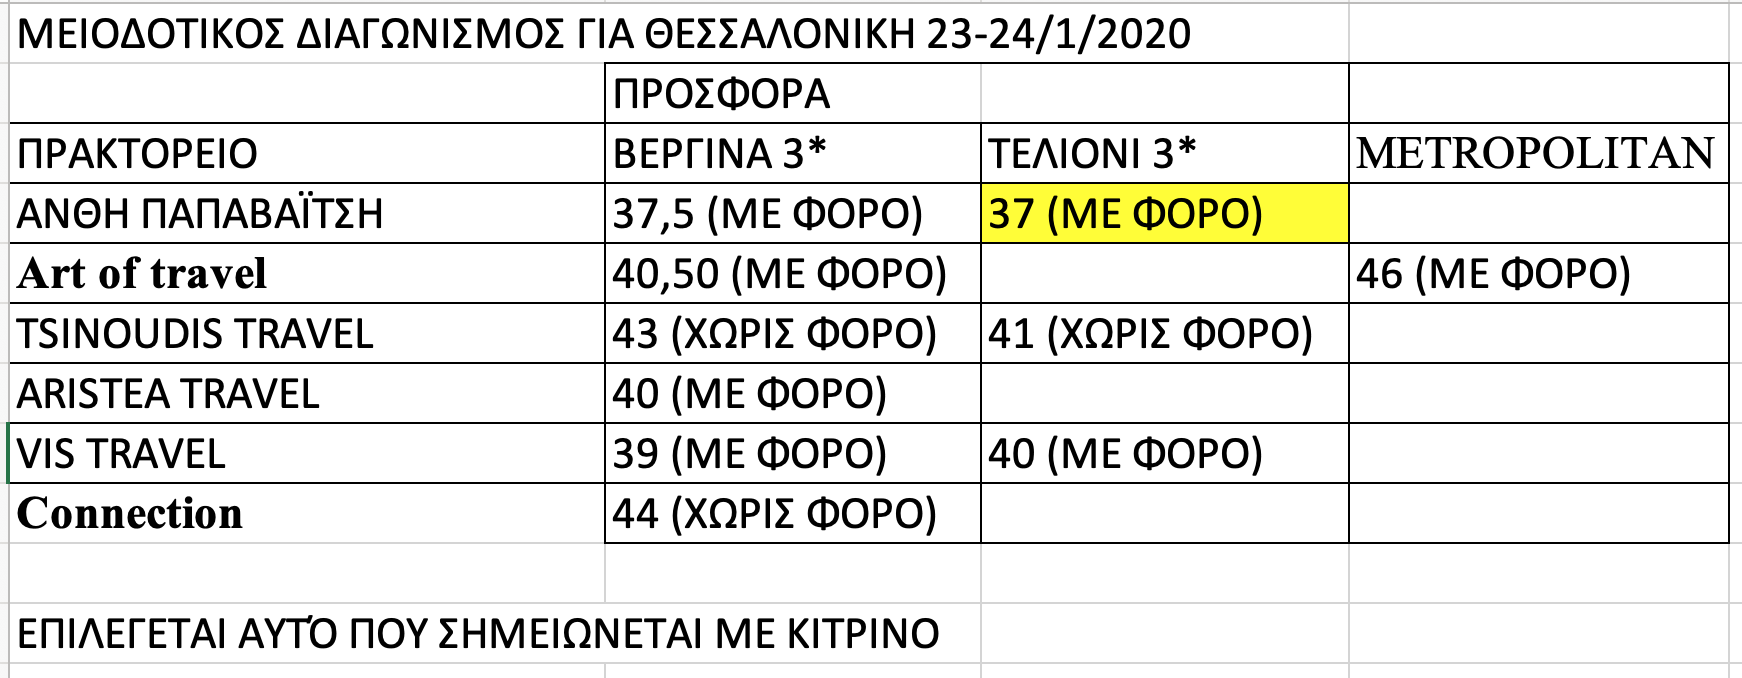 thessaloniki b 2019